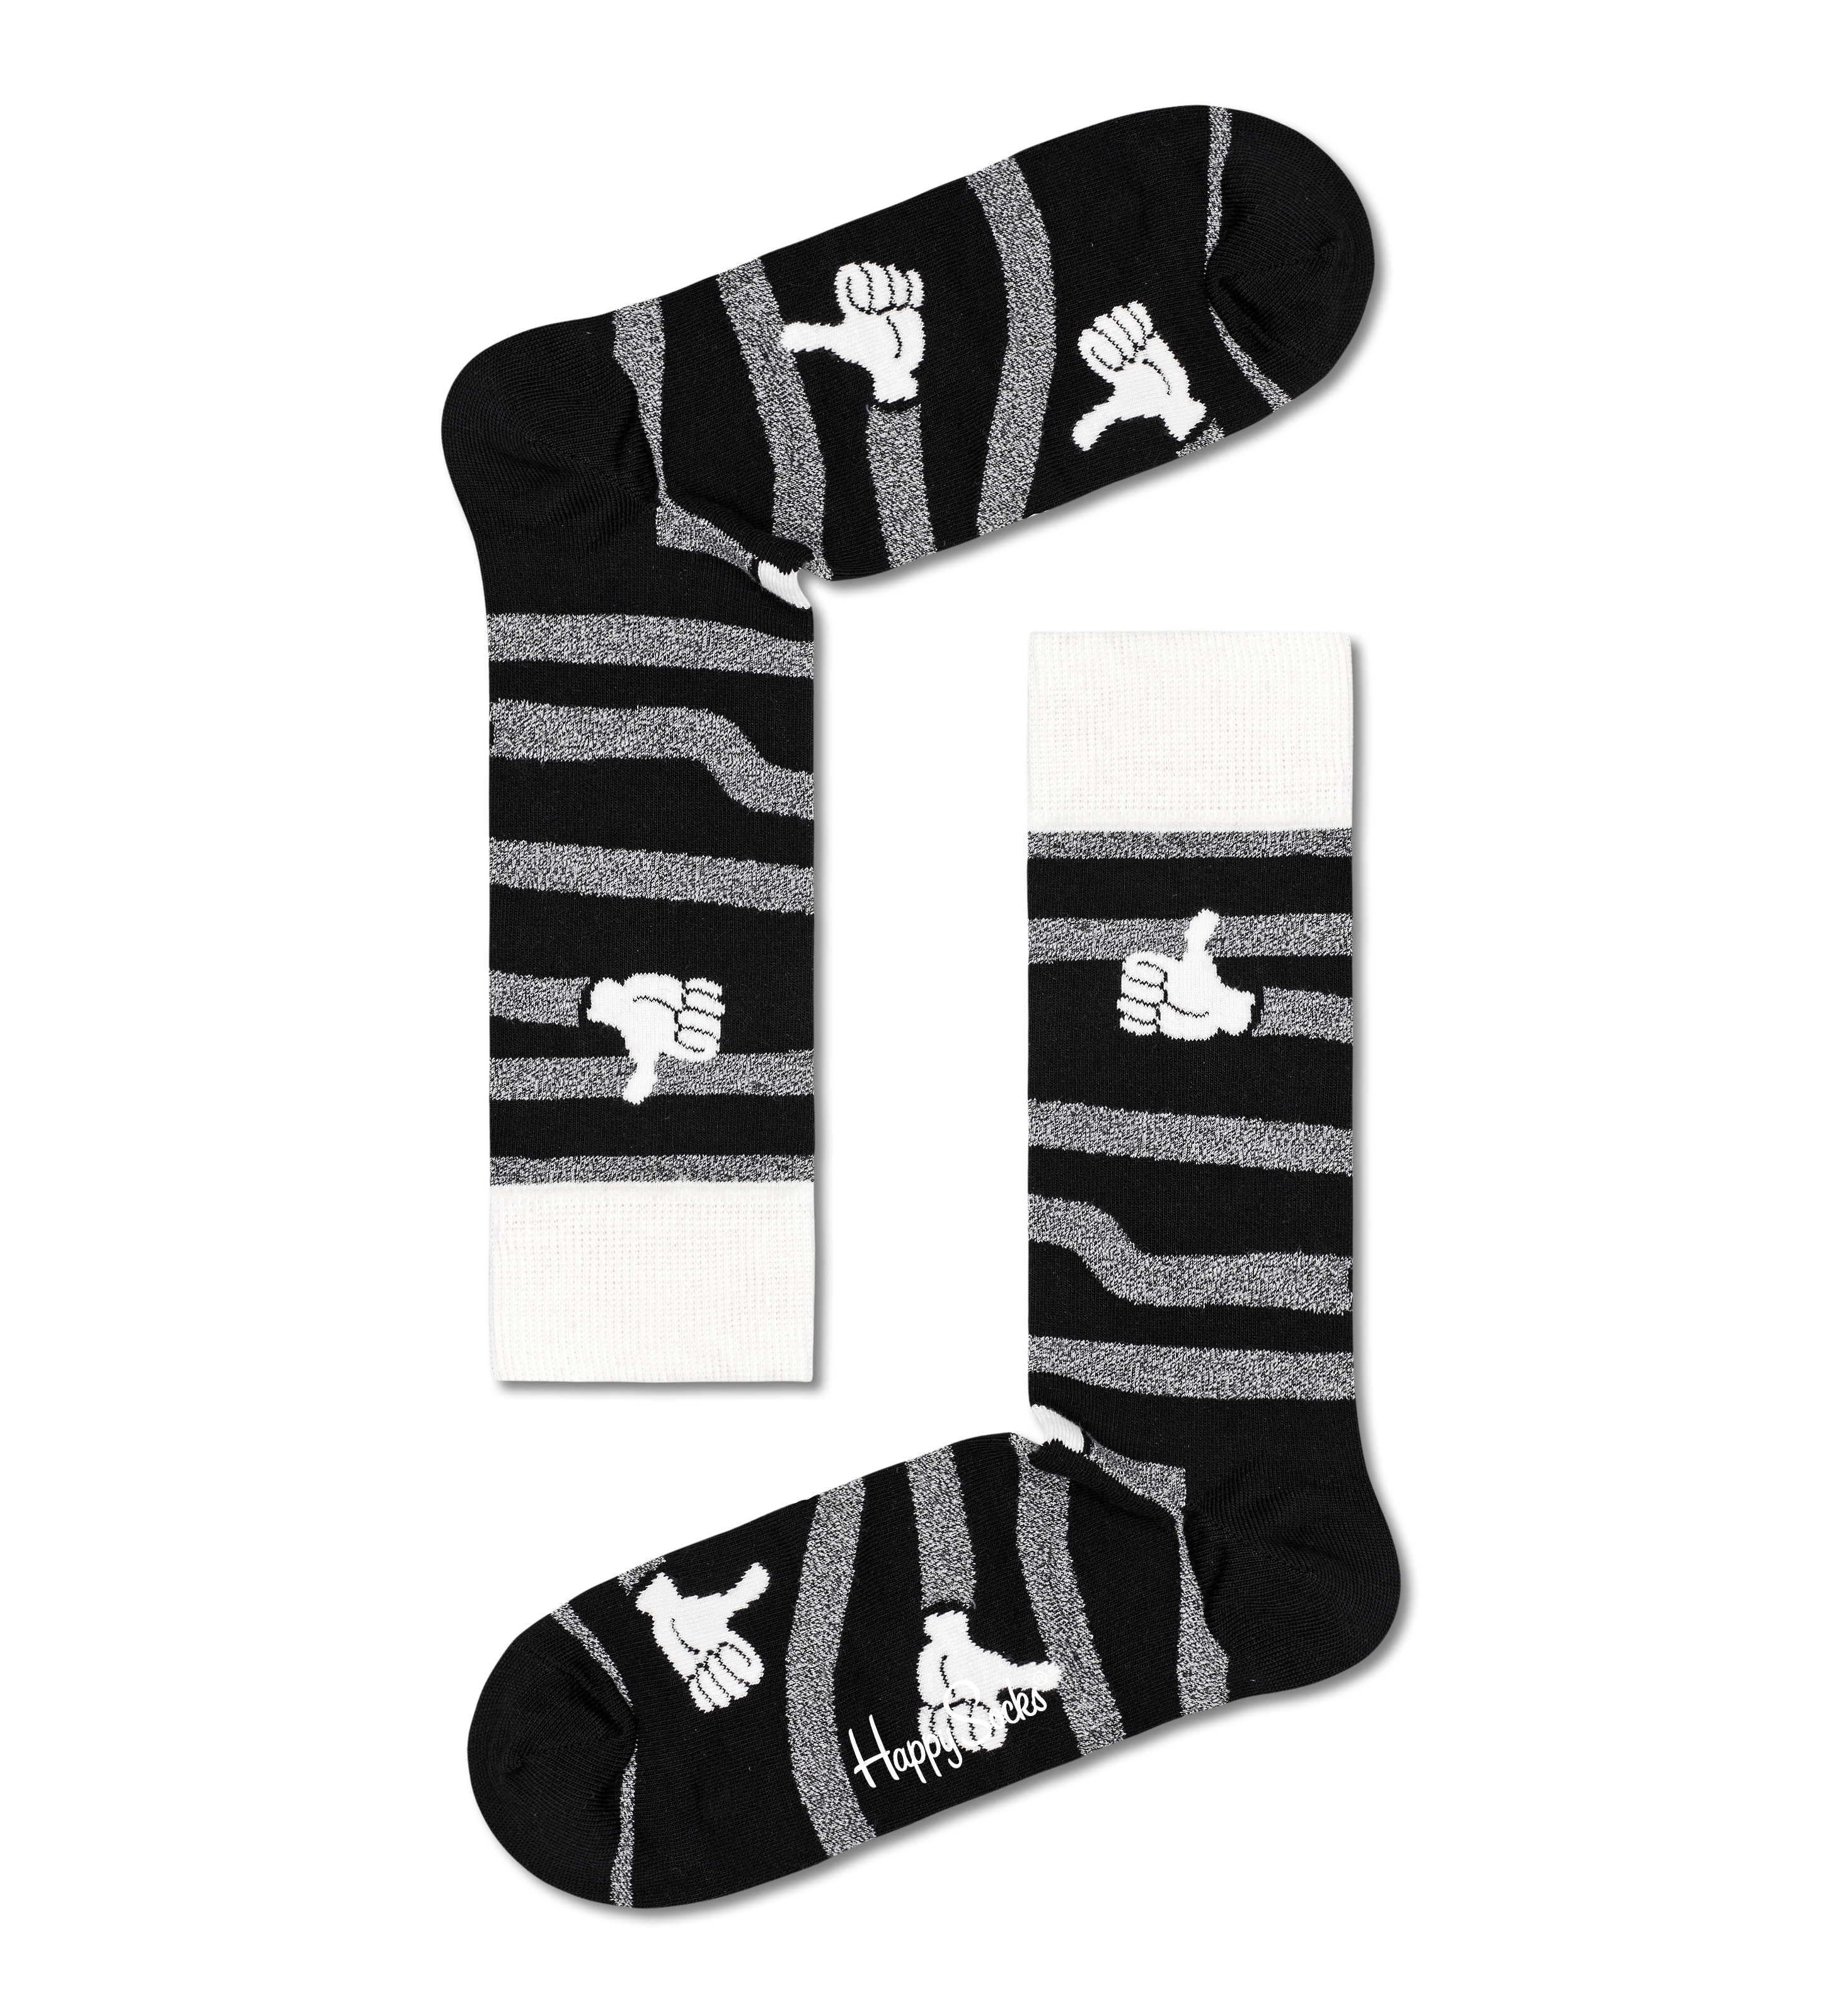 Black And White Socks Gift Set 4pc | Happy Socks US